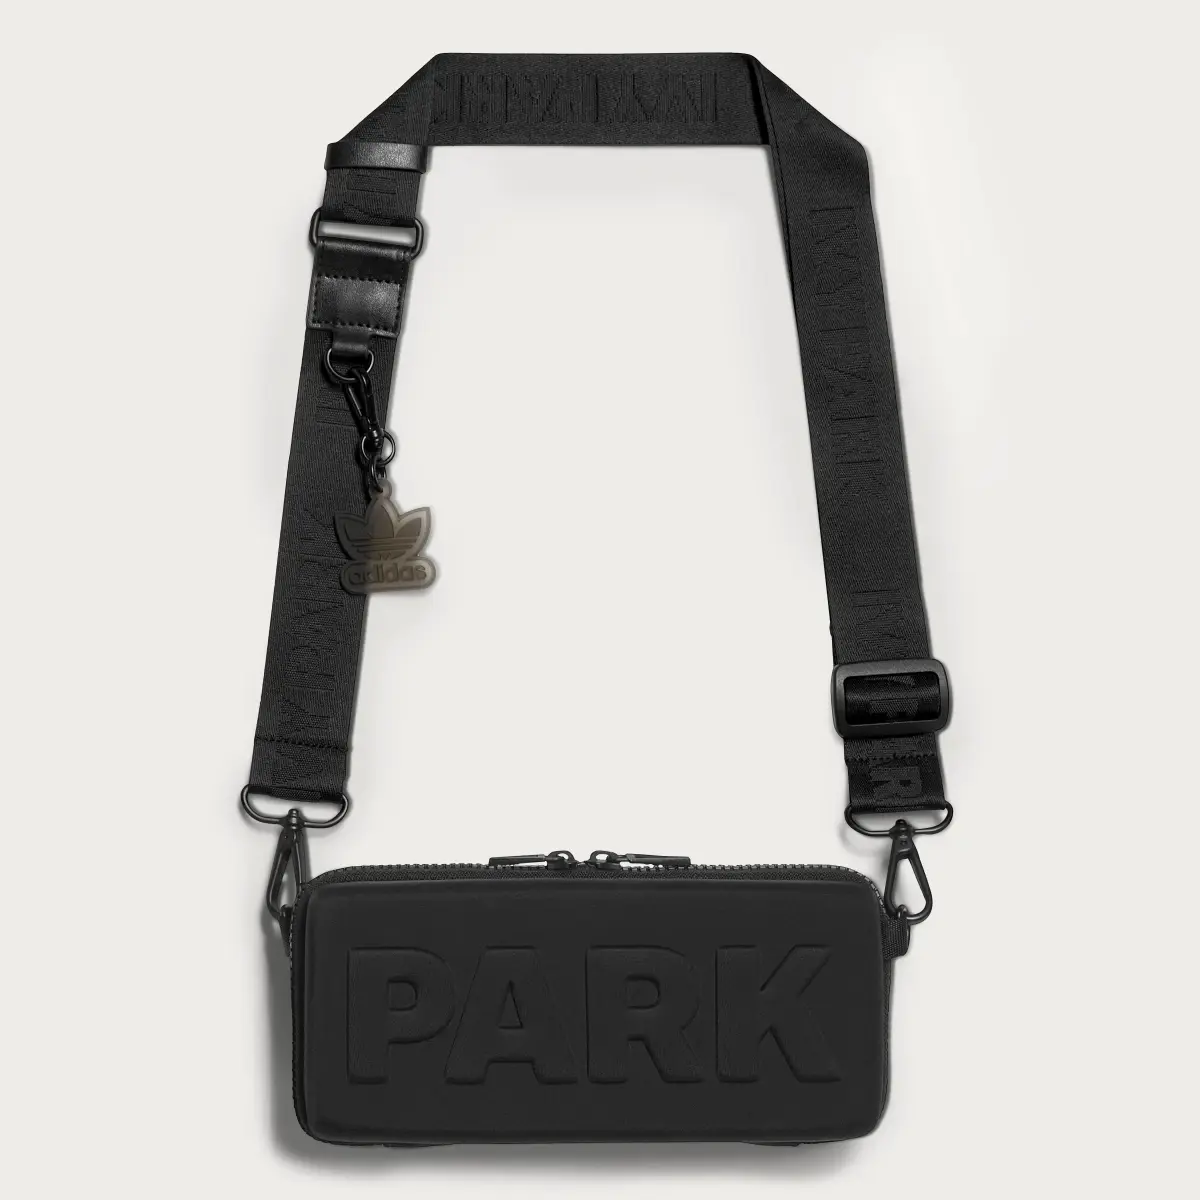 Adidas 3D Crossbody Bag. 3